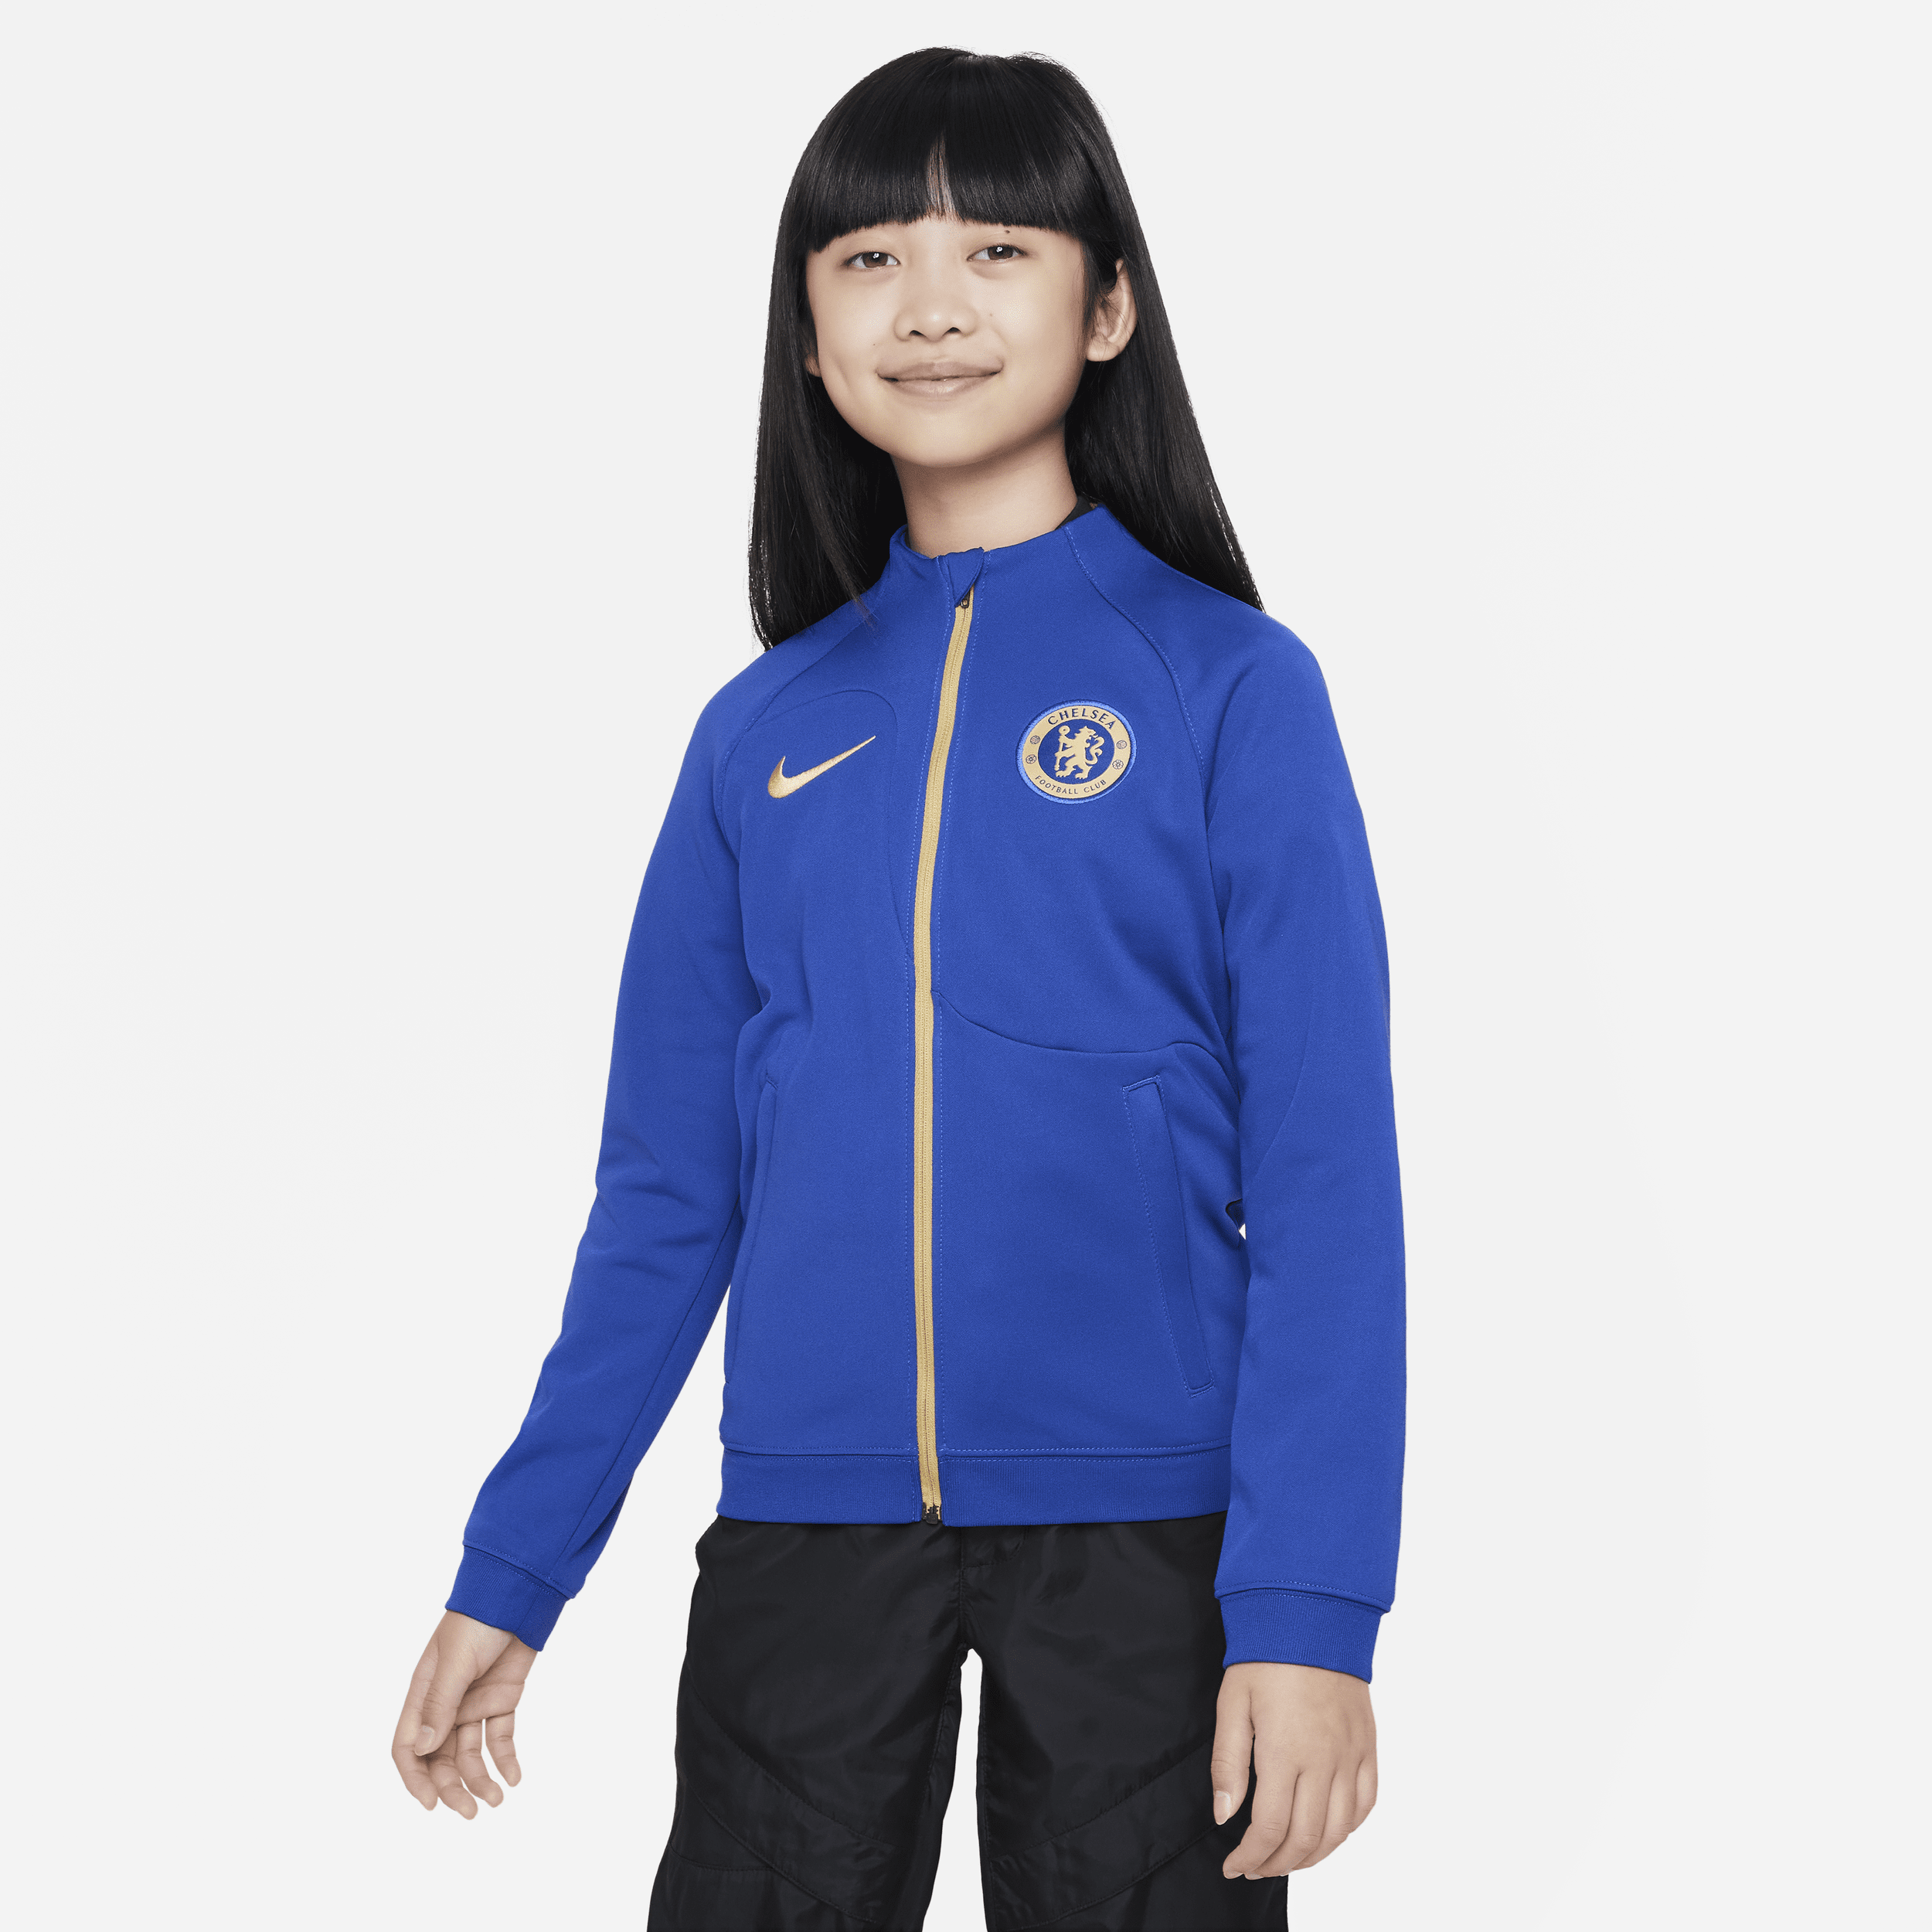 Chelsea FC Academy Pro Nike Knit voetbaljack voor kids - Blauw